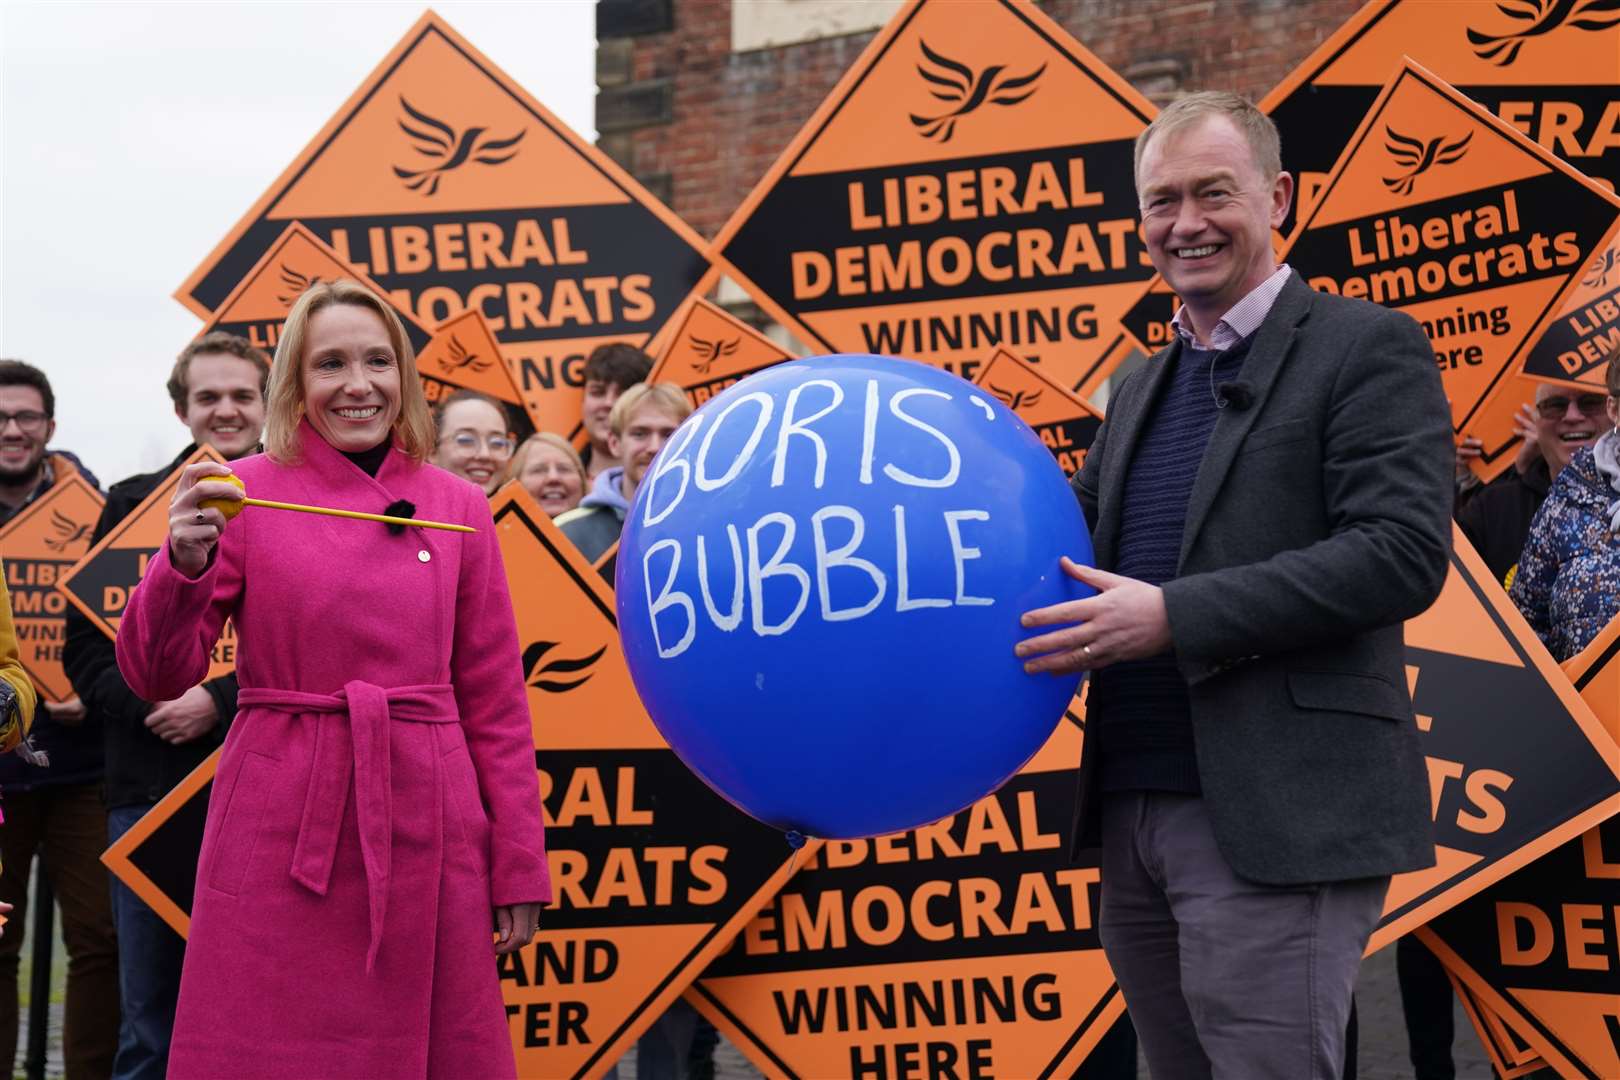 Newly elected Liberal Democrat MP Helen Morgan bursts ‘Boris’ bubble’ as she celebrates her victory (Jacob King/PA)